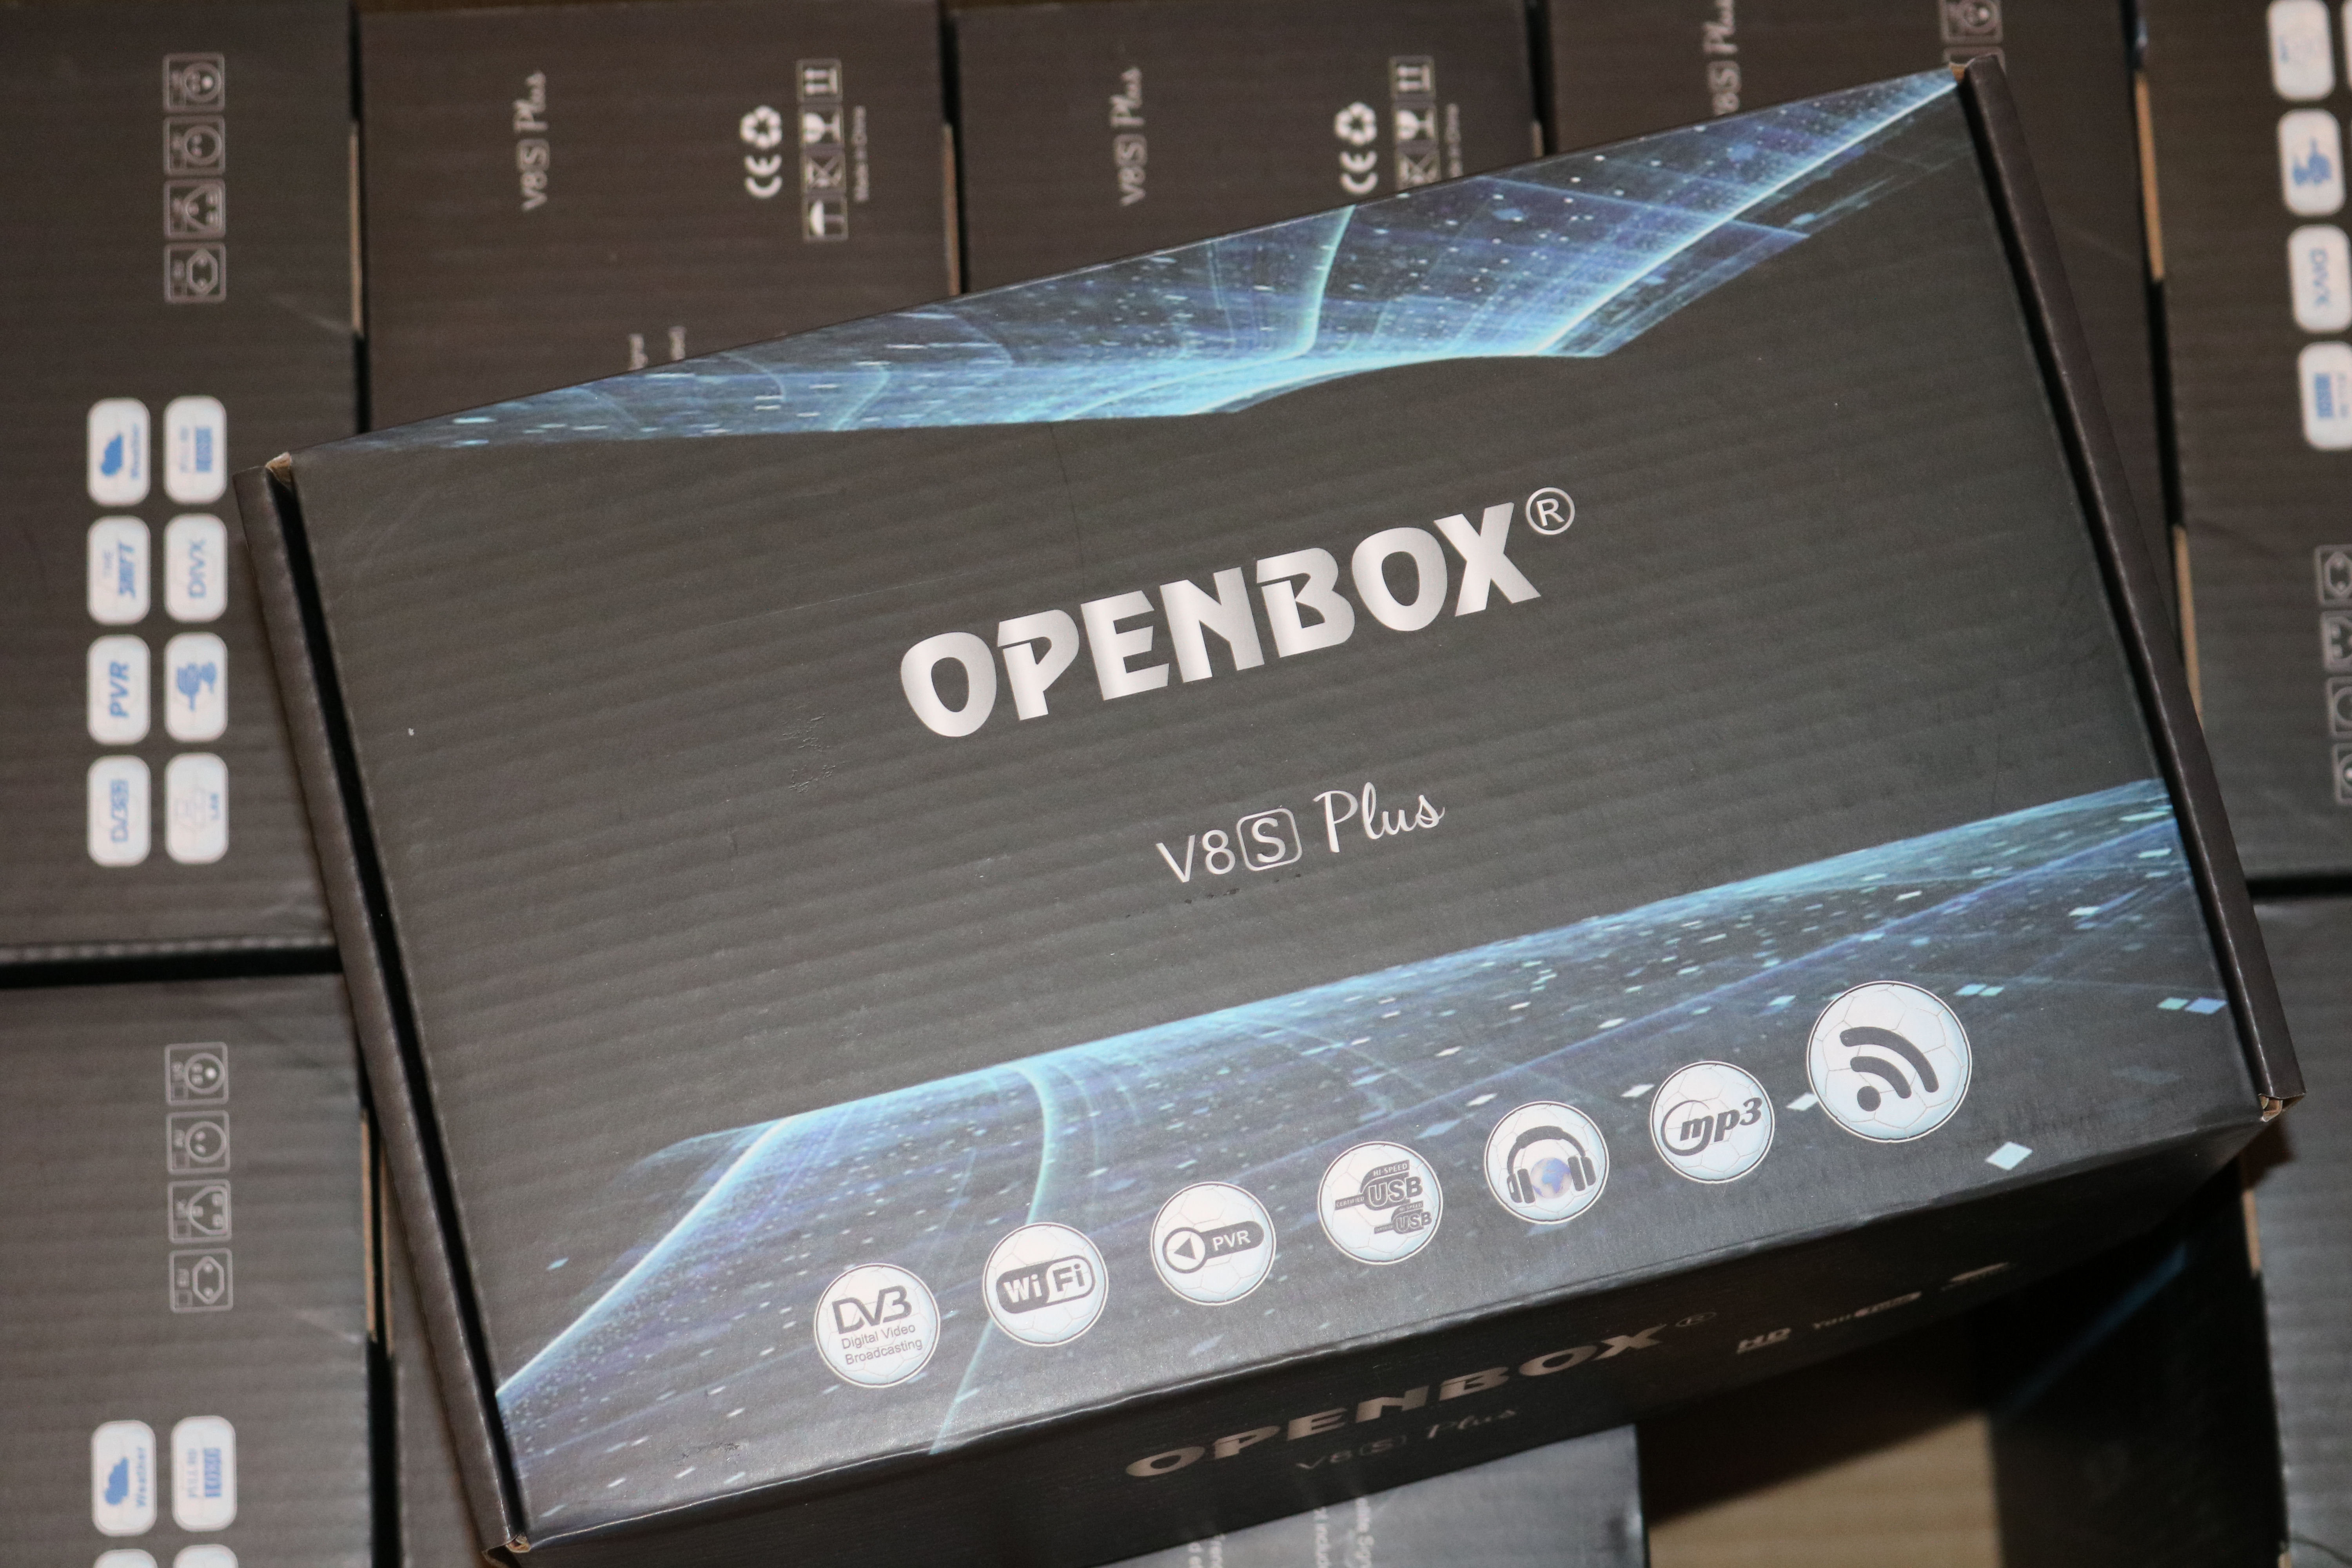 openbox v8s plus